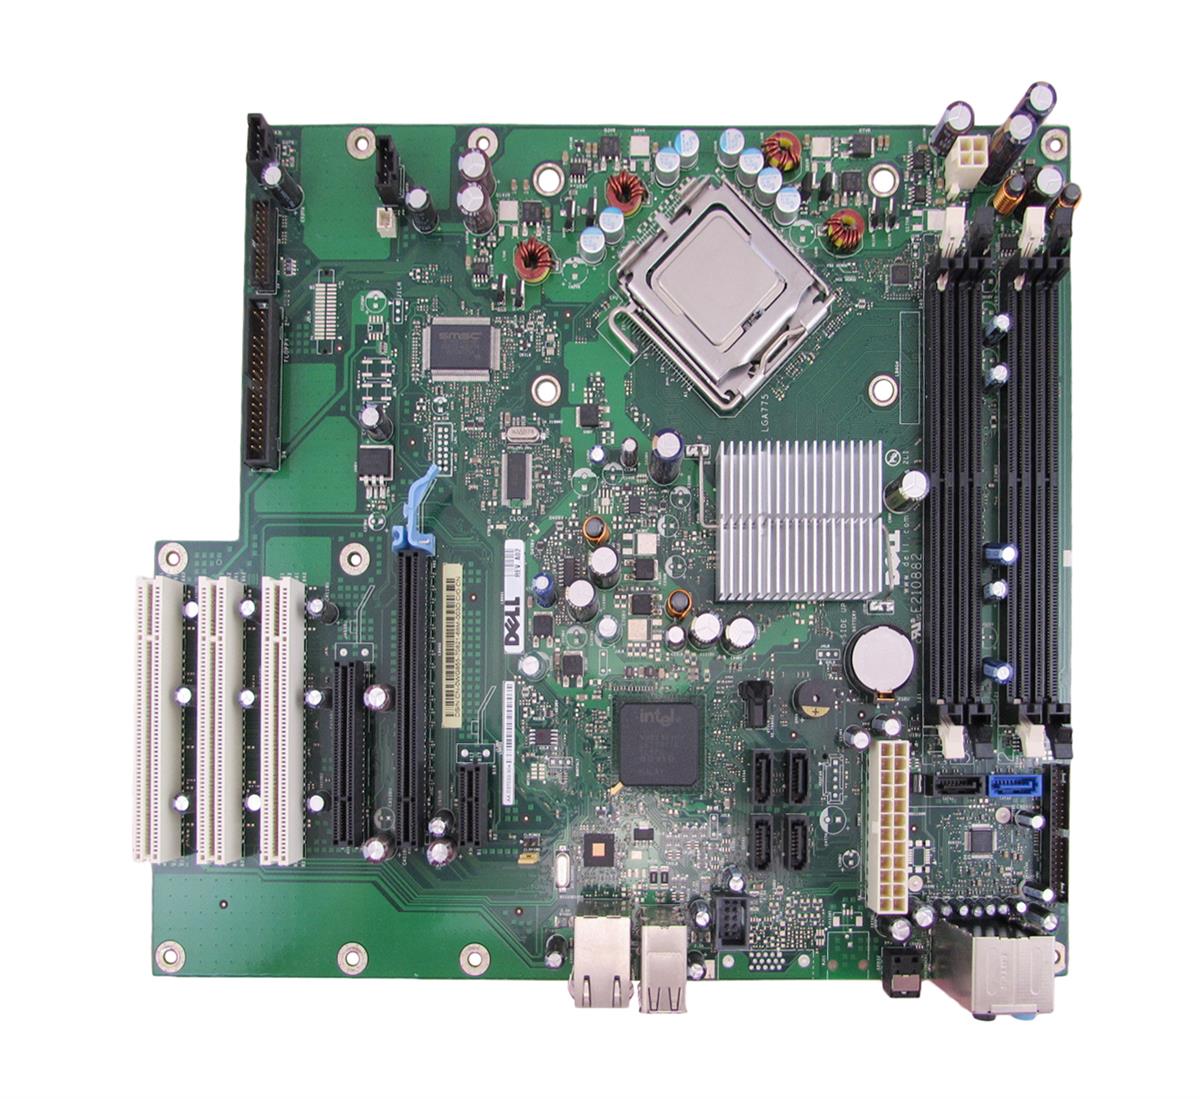 0WG855 Dell System Board (Motherboard) for Dimension 9200, XPS 410 (Refurbished)